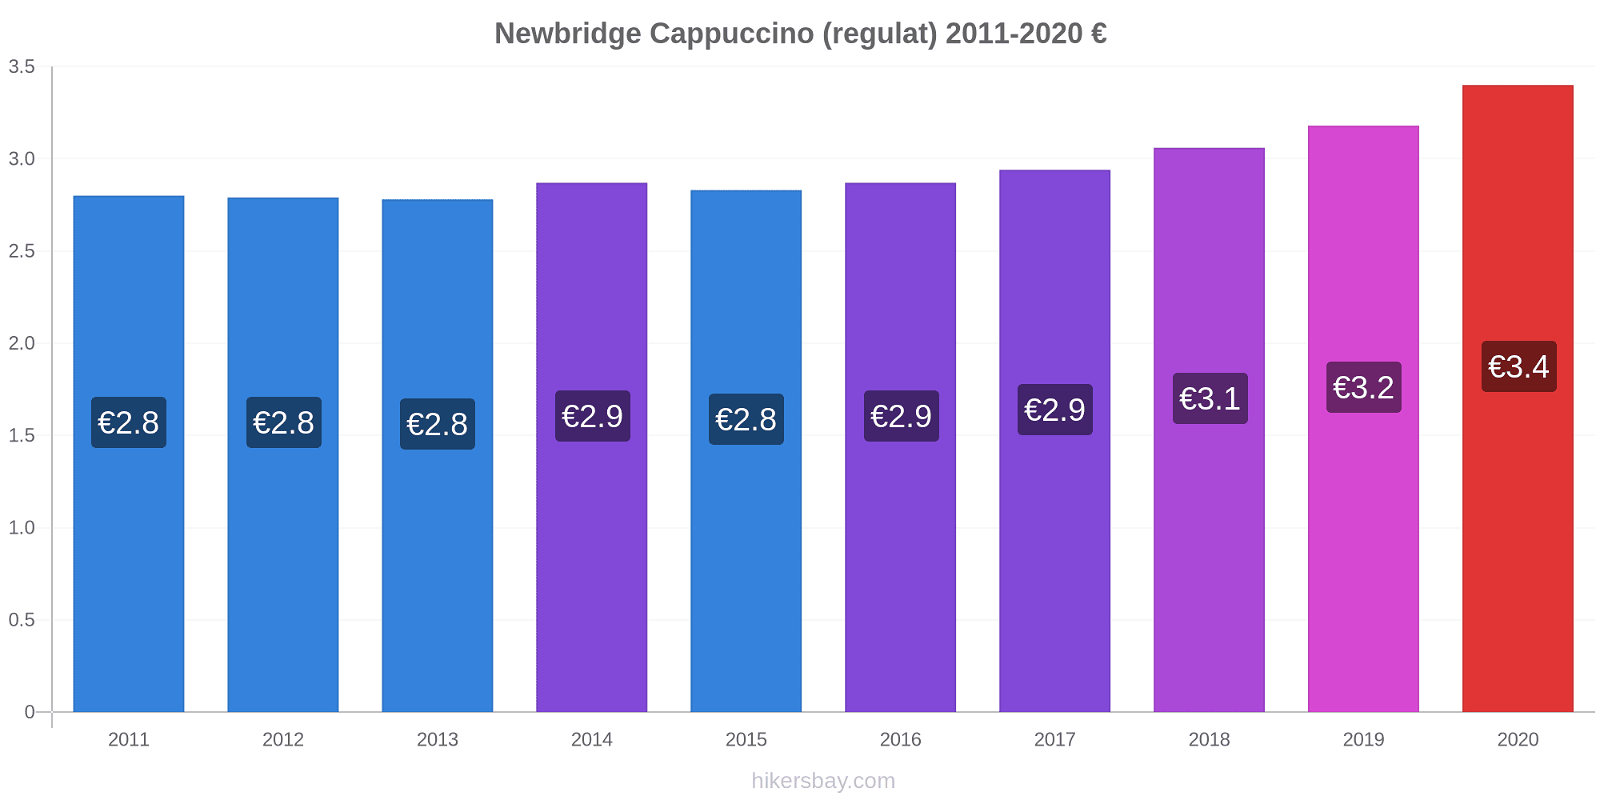 Newbridge modificări de preț Cappuccino (regulat) hikersbay.com